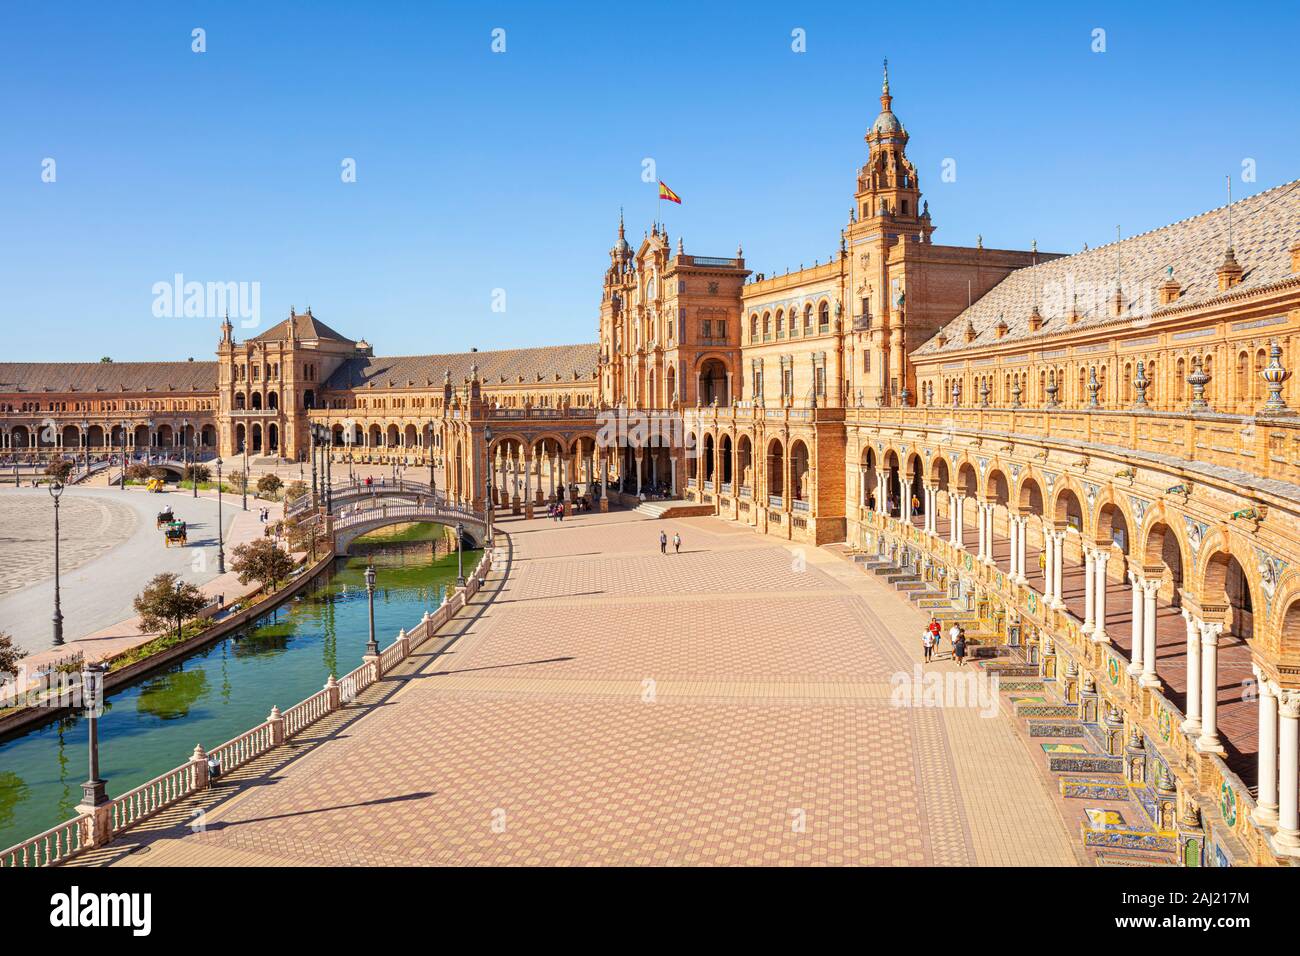 Plaza de Espana with canal and bridge, Maria Luisa Park, Seville, Andalusia, Spain, Europe Stock Photo